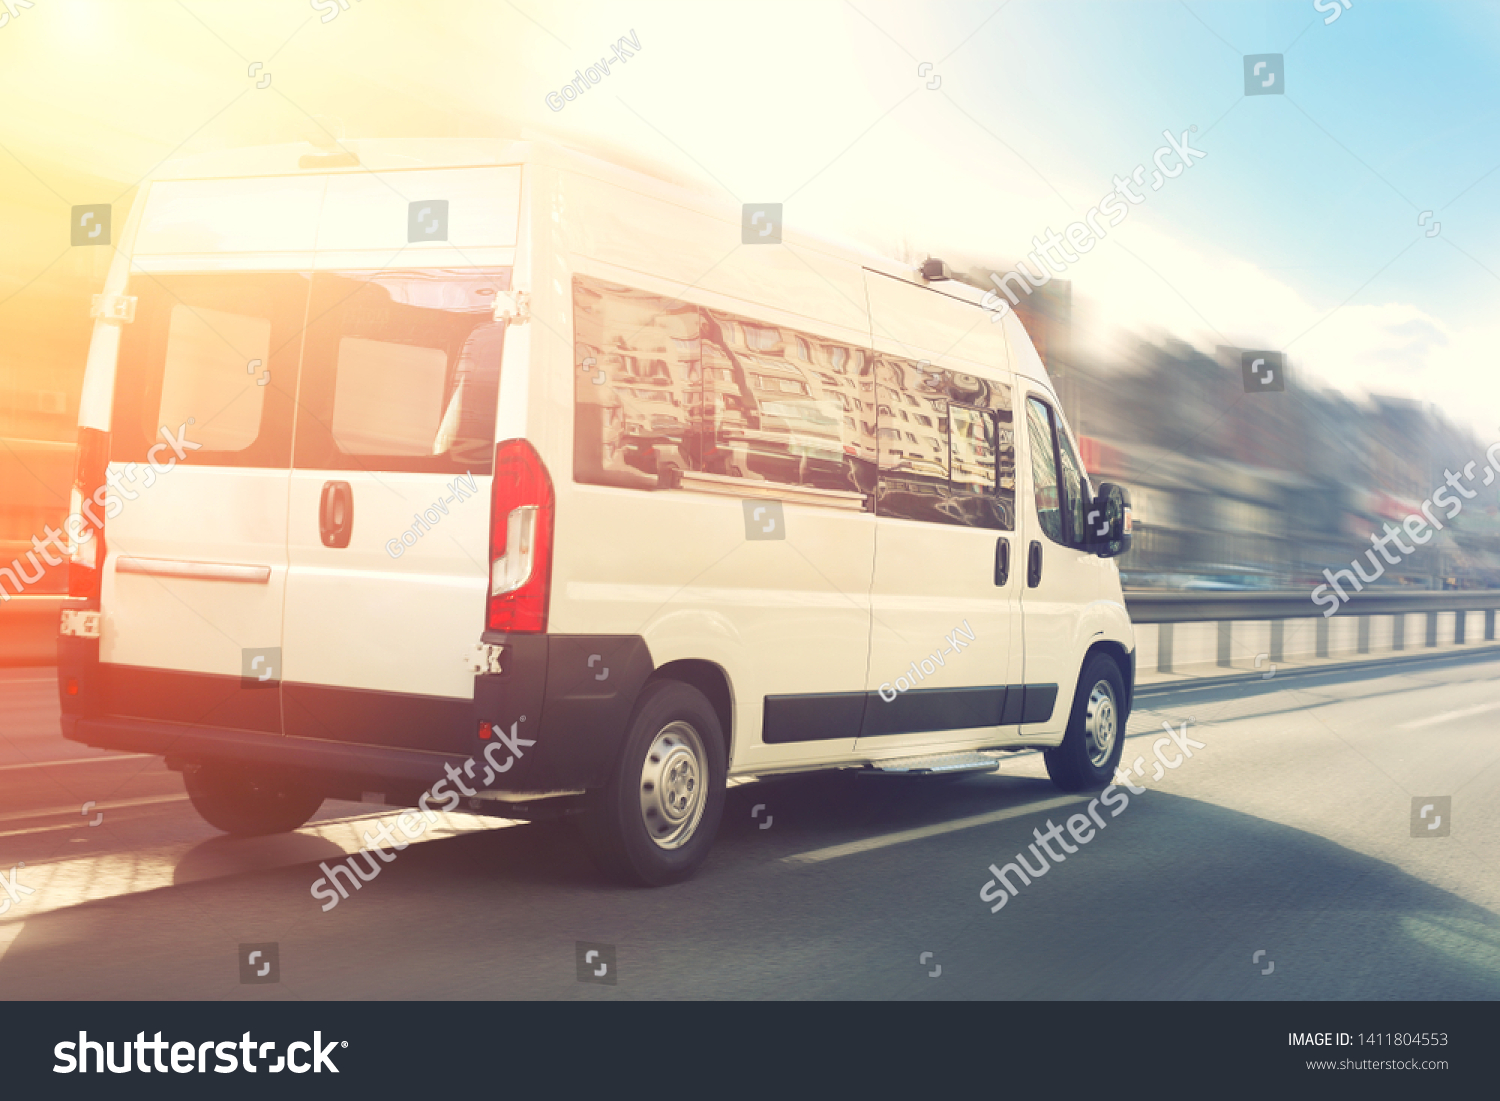 small passenger van